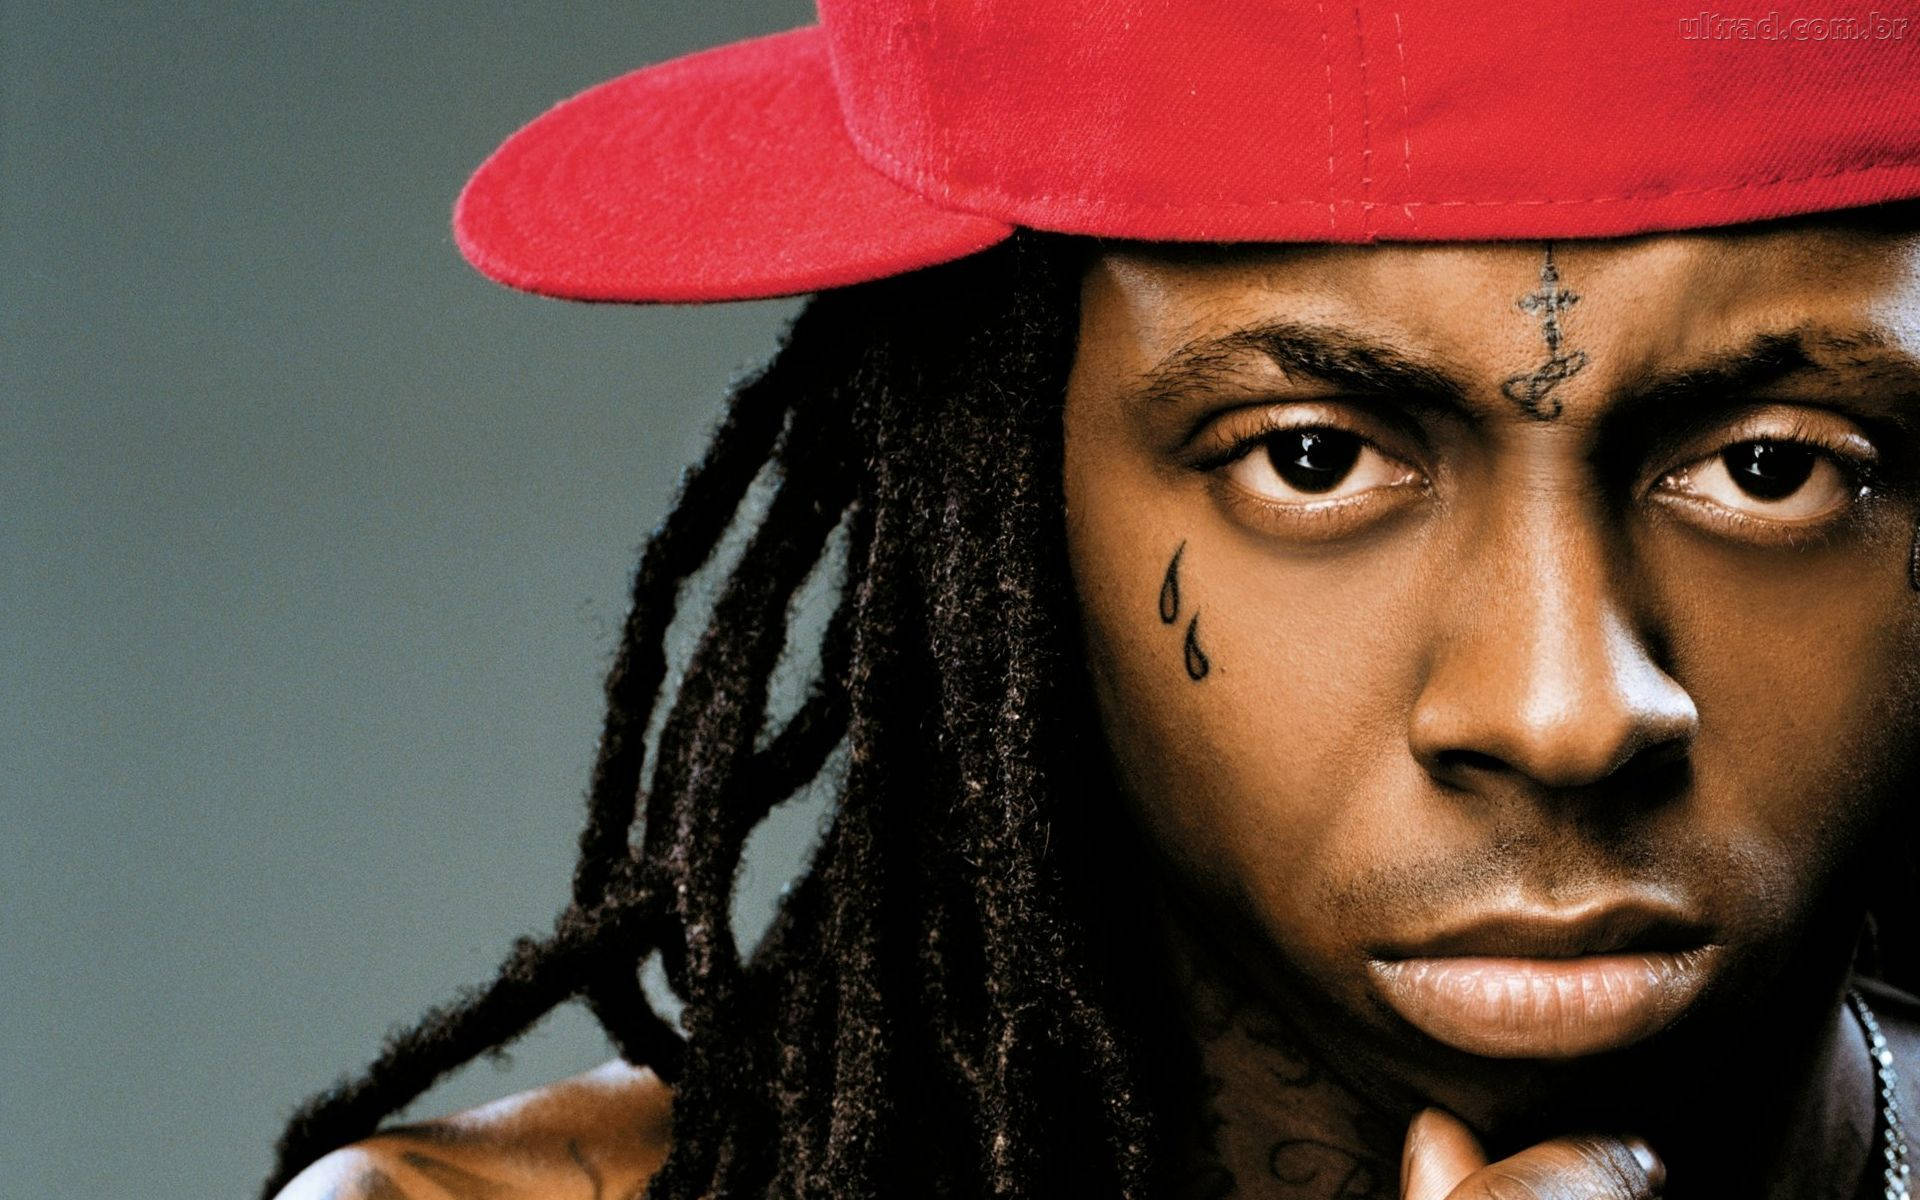 Caption: Lil Wayne Performing On Stage